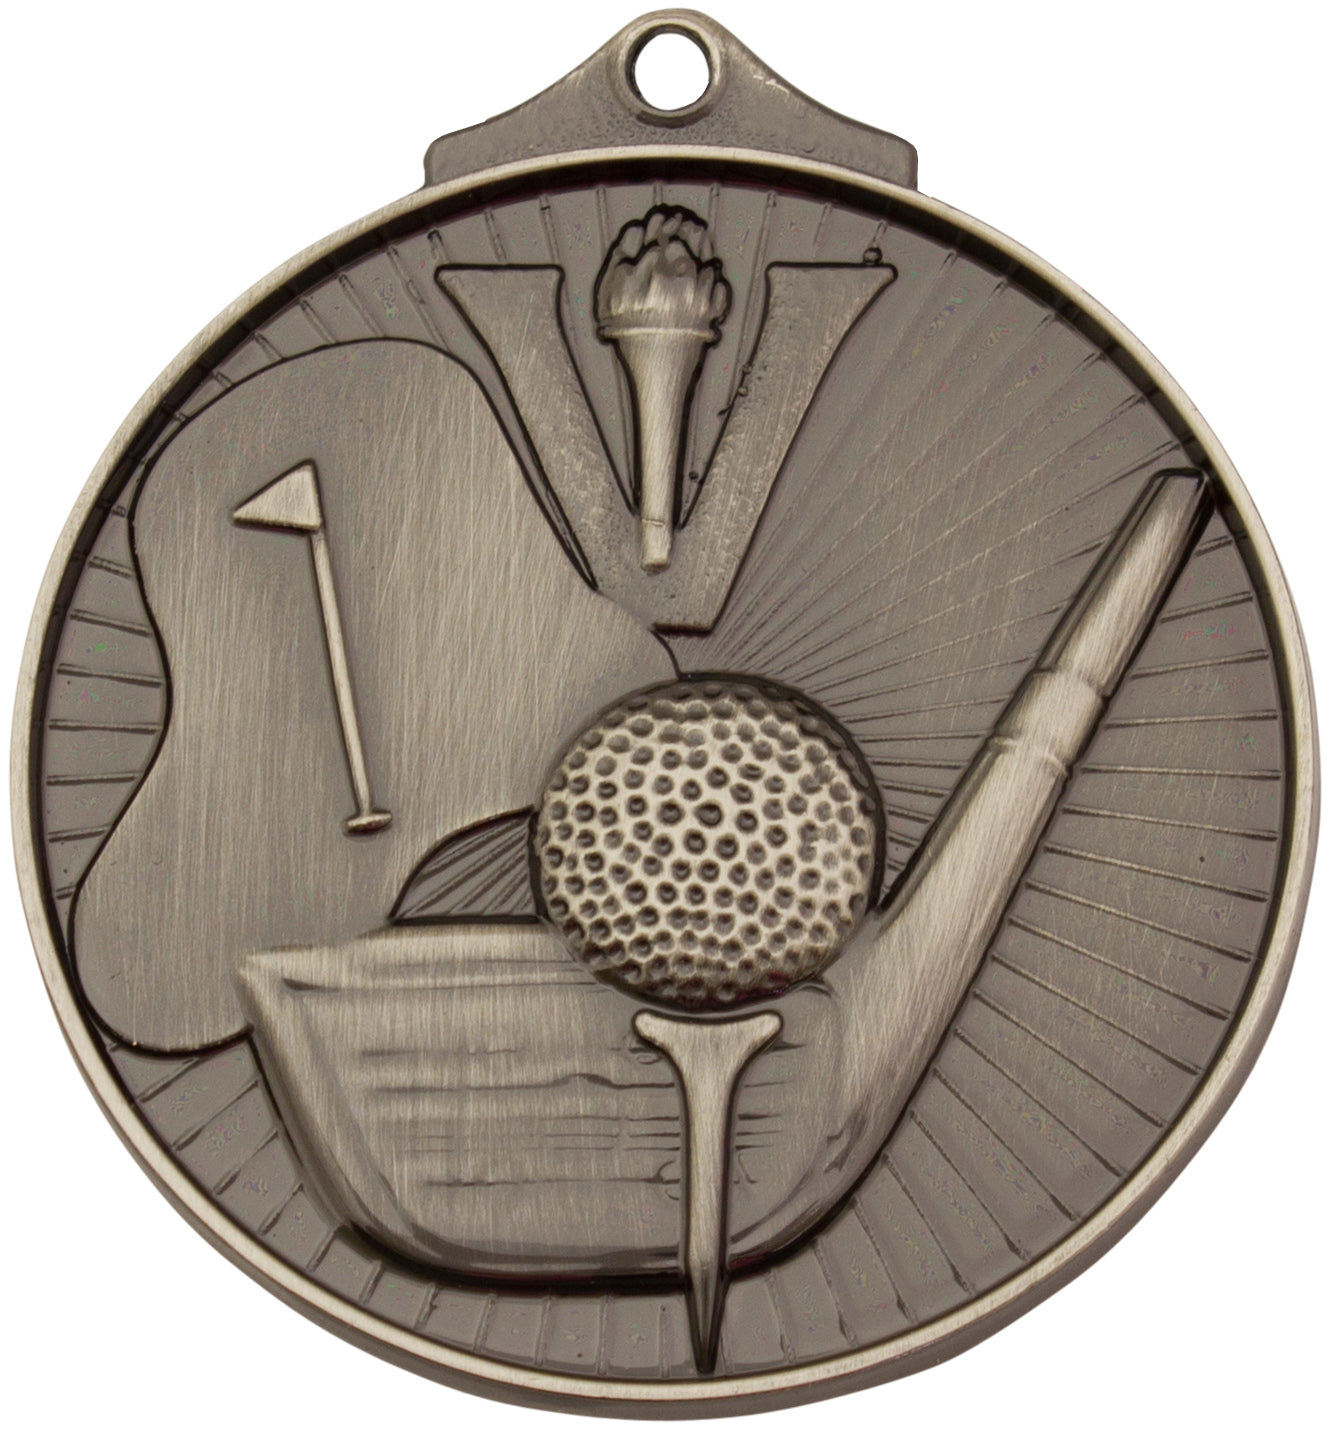 MD909 Golf Medal